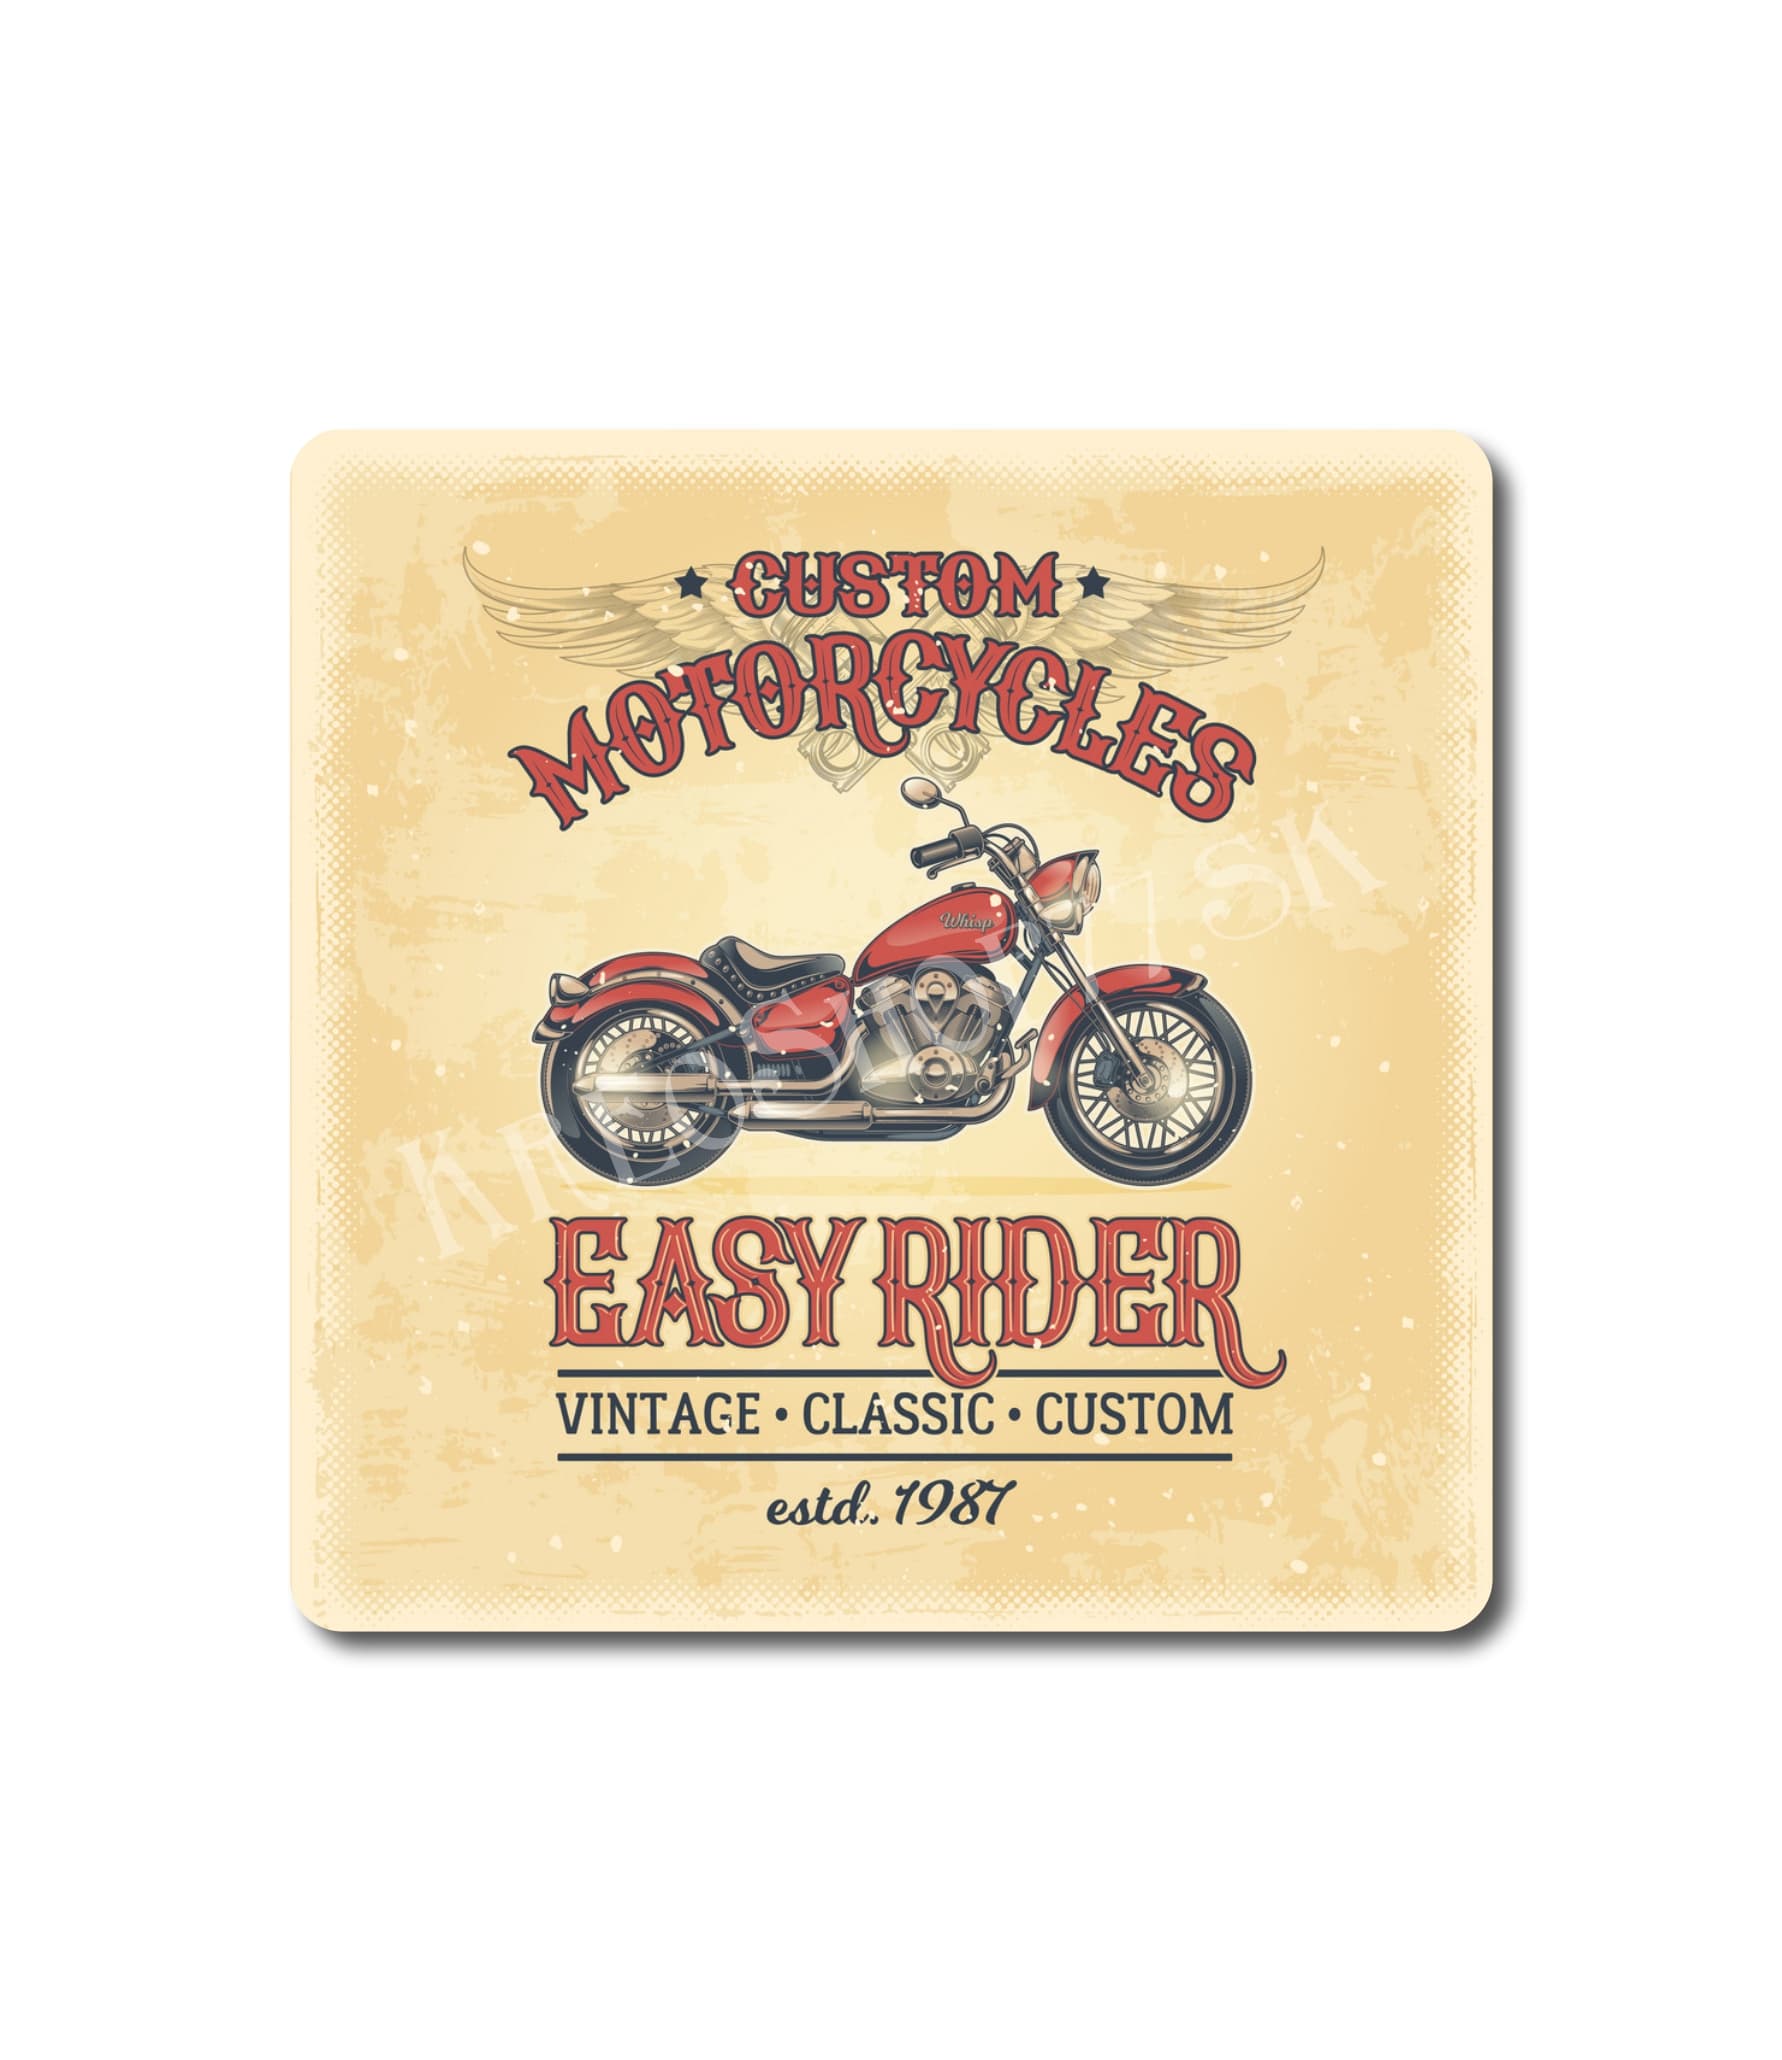 Retro Poster Motorcycle 007